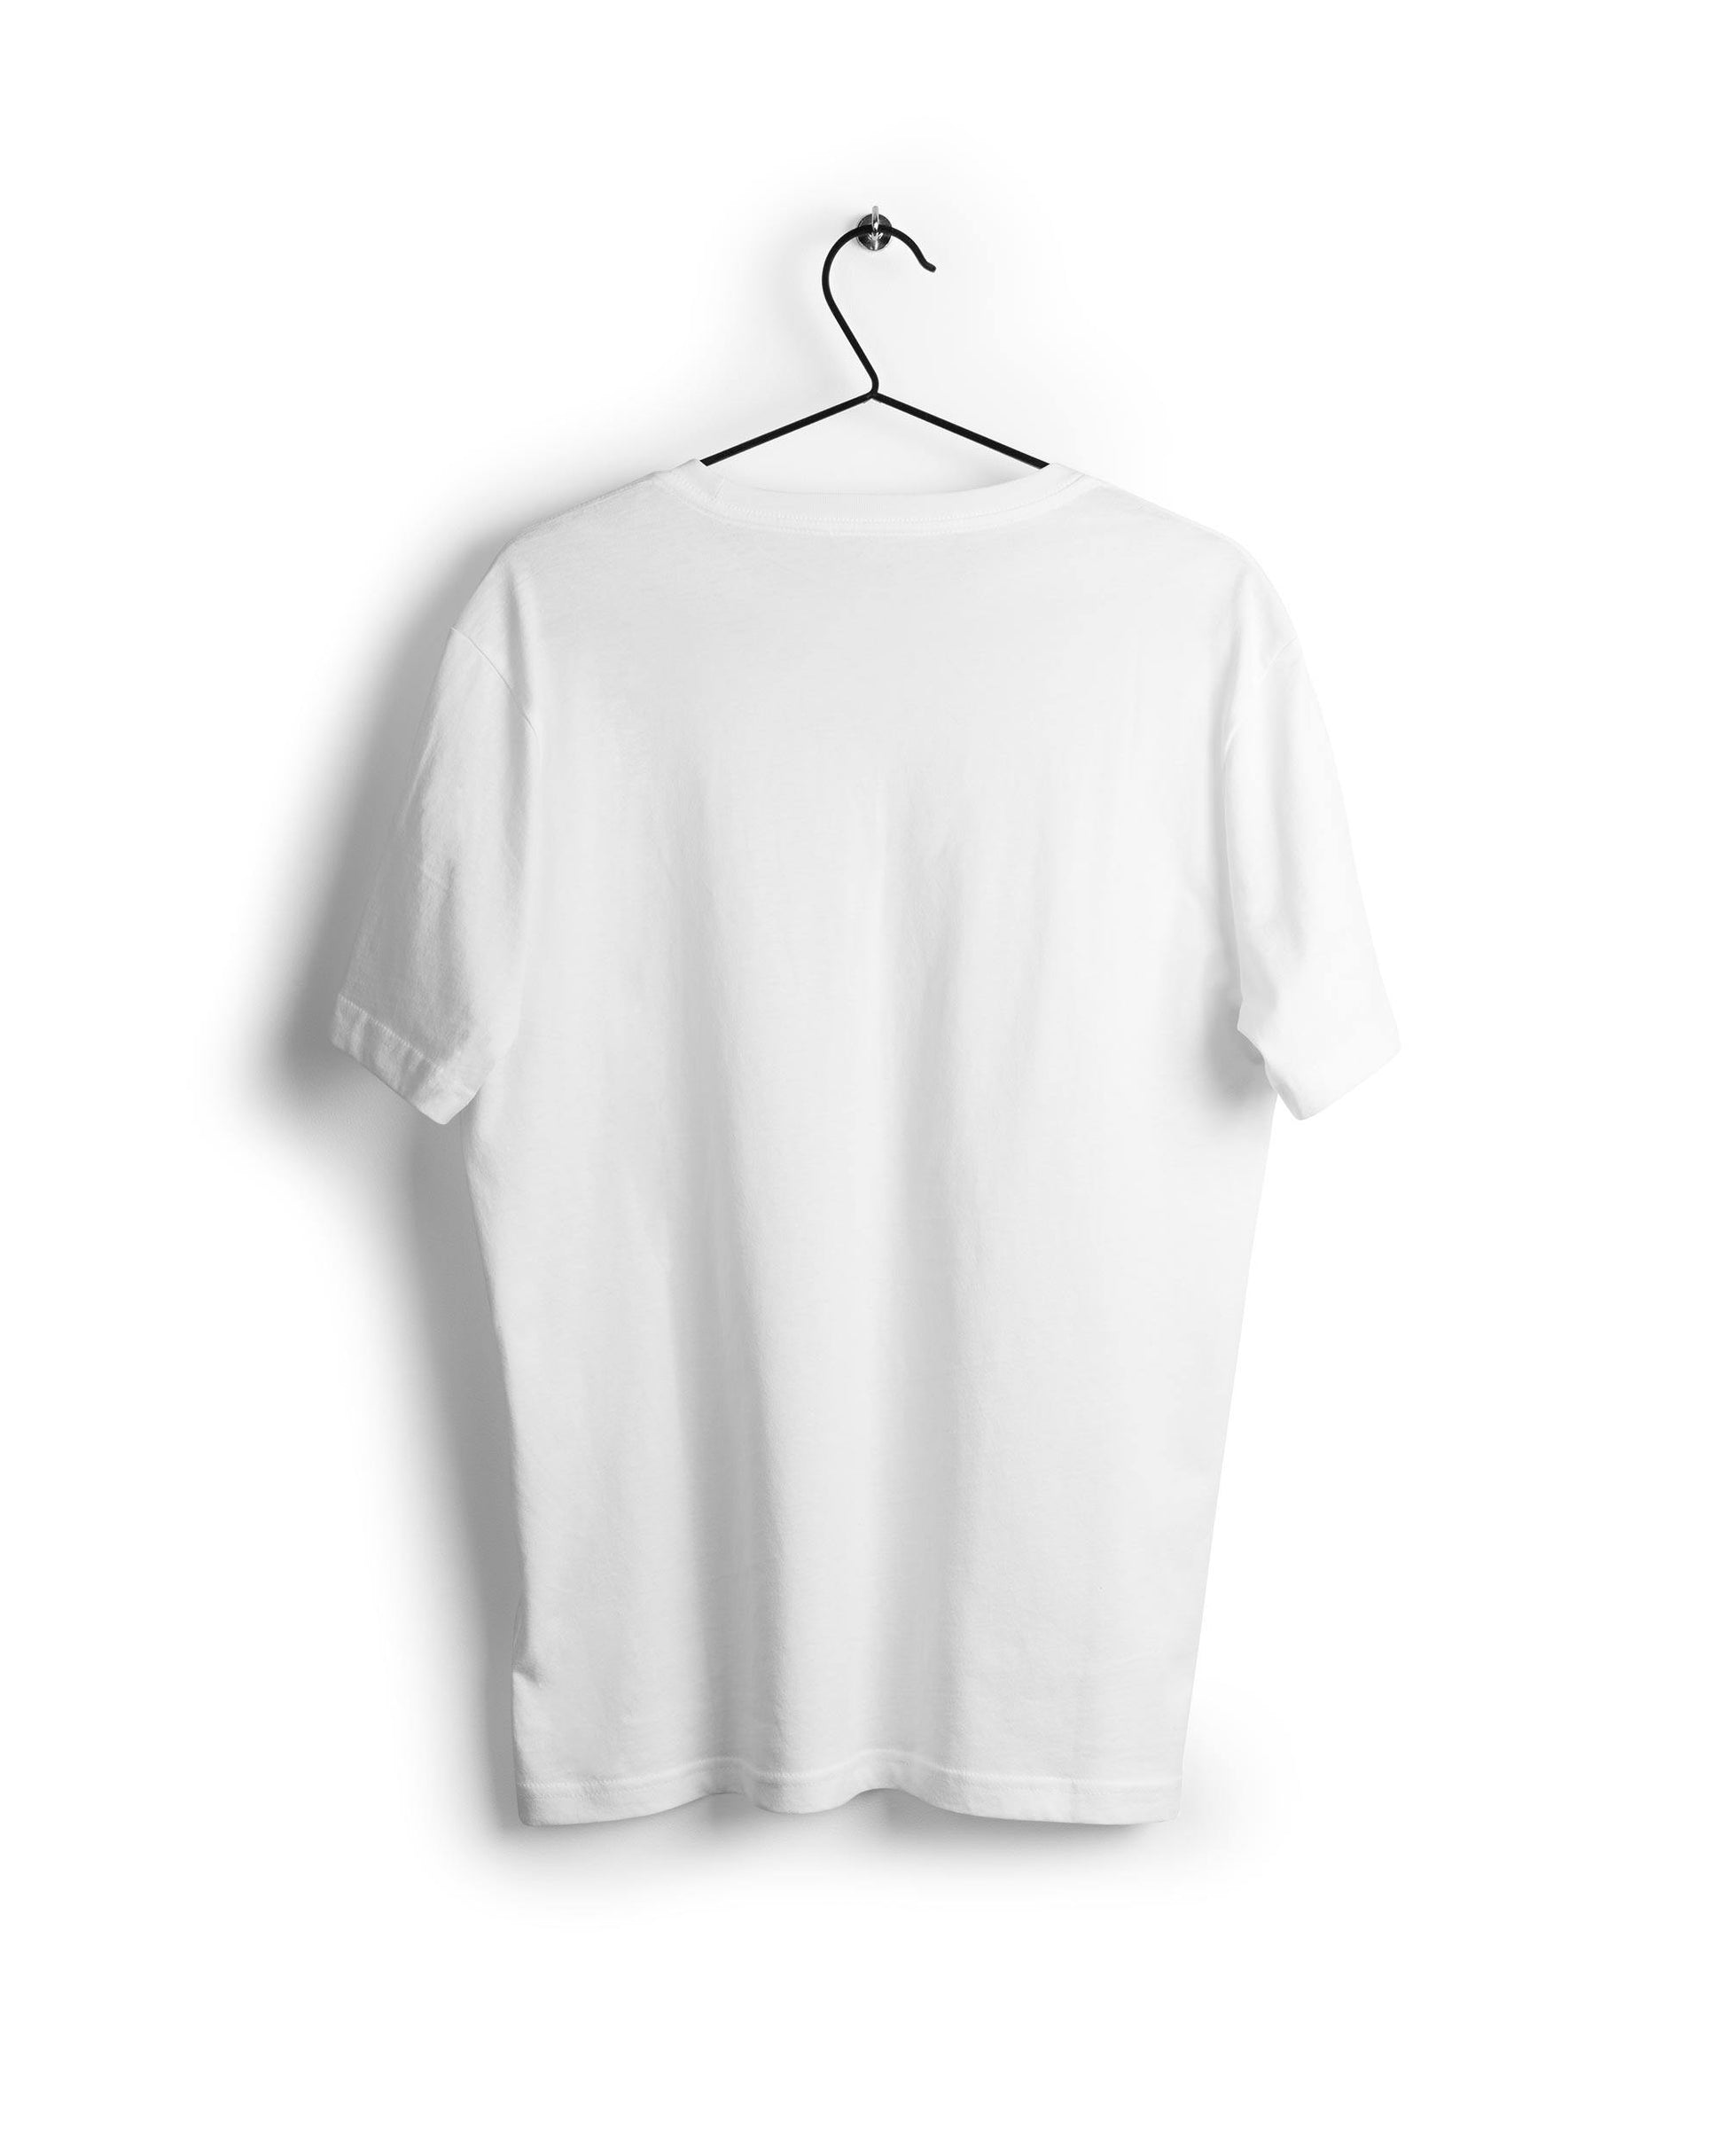 Denver La Casa De Papel X Ravin X Hippo - Digital Graphics Basic T-shirt White - Ravin 